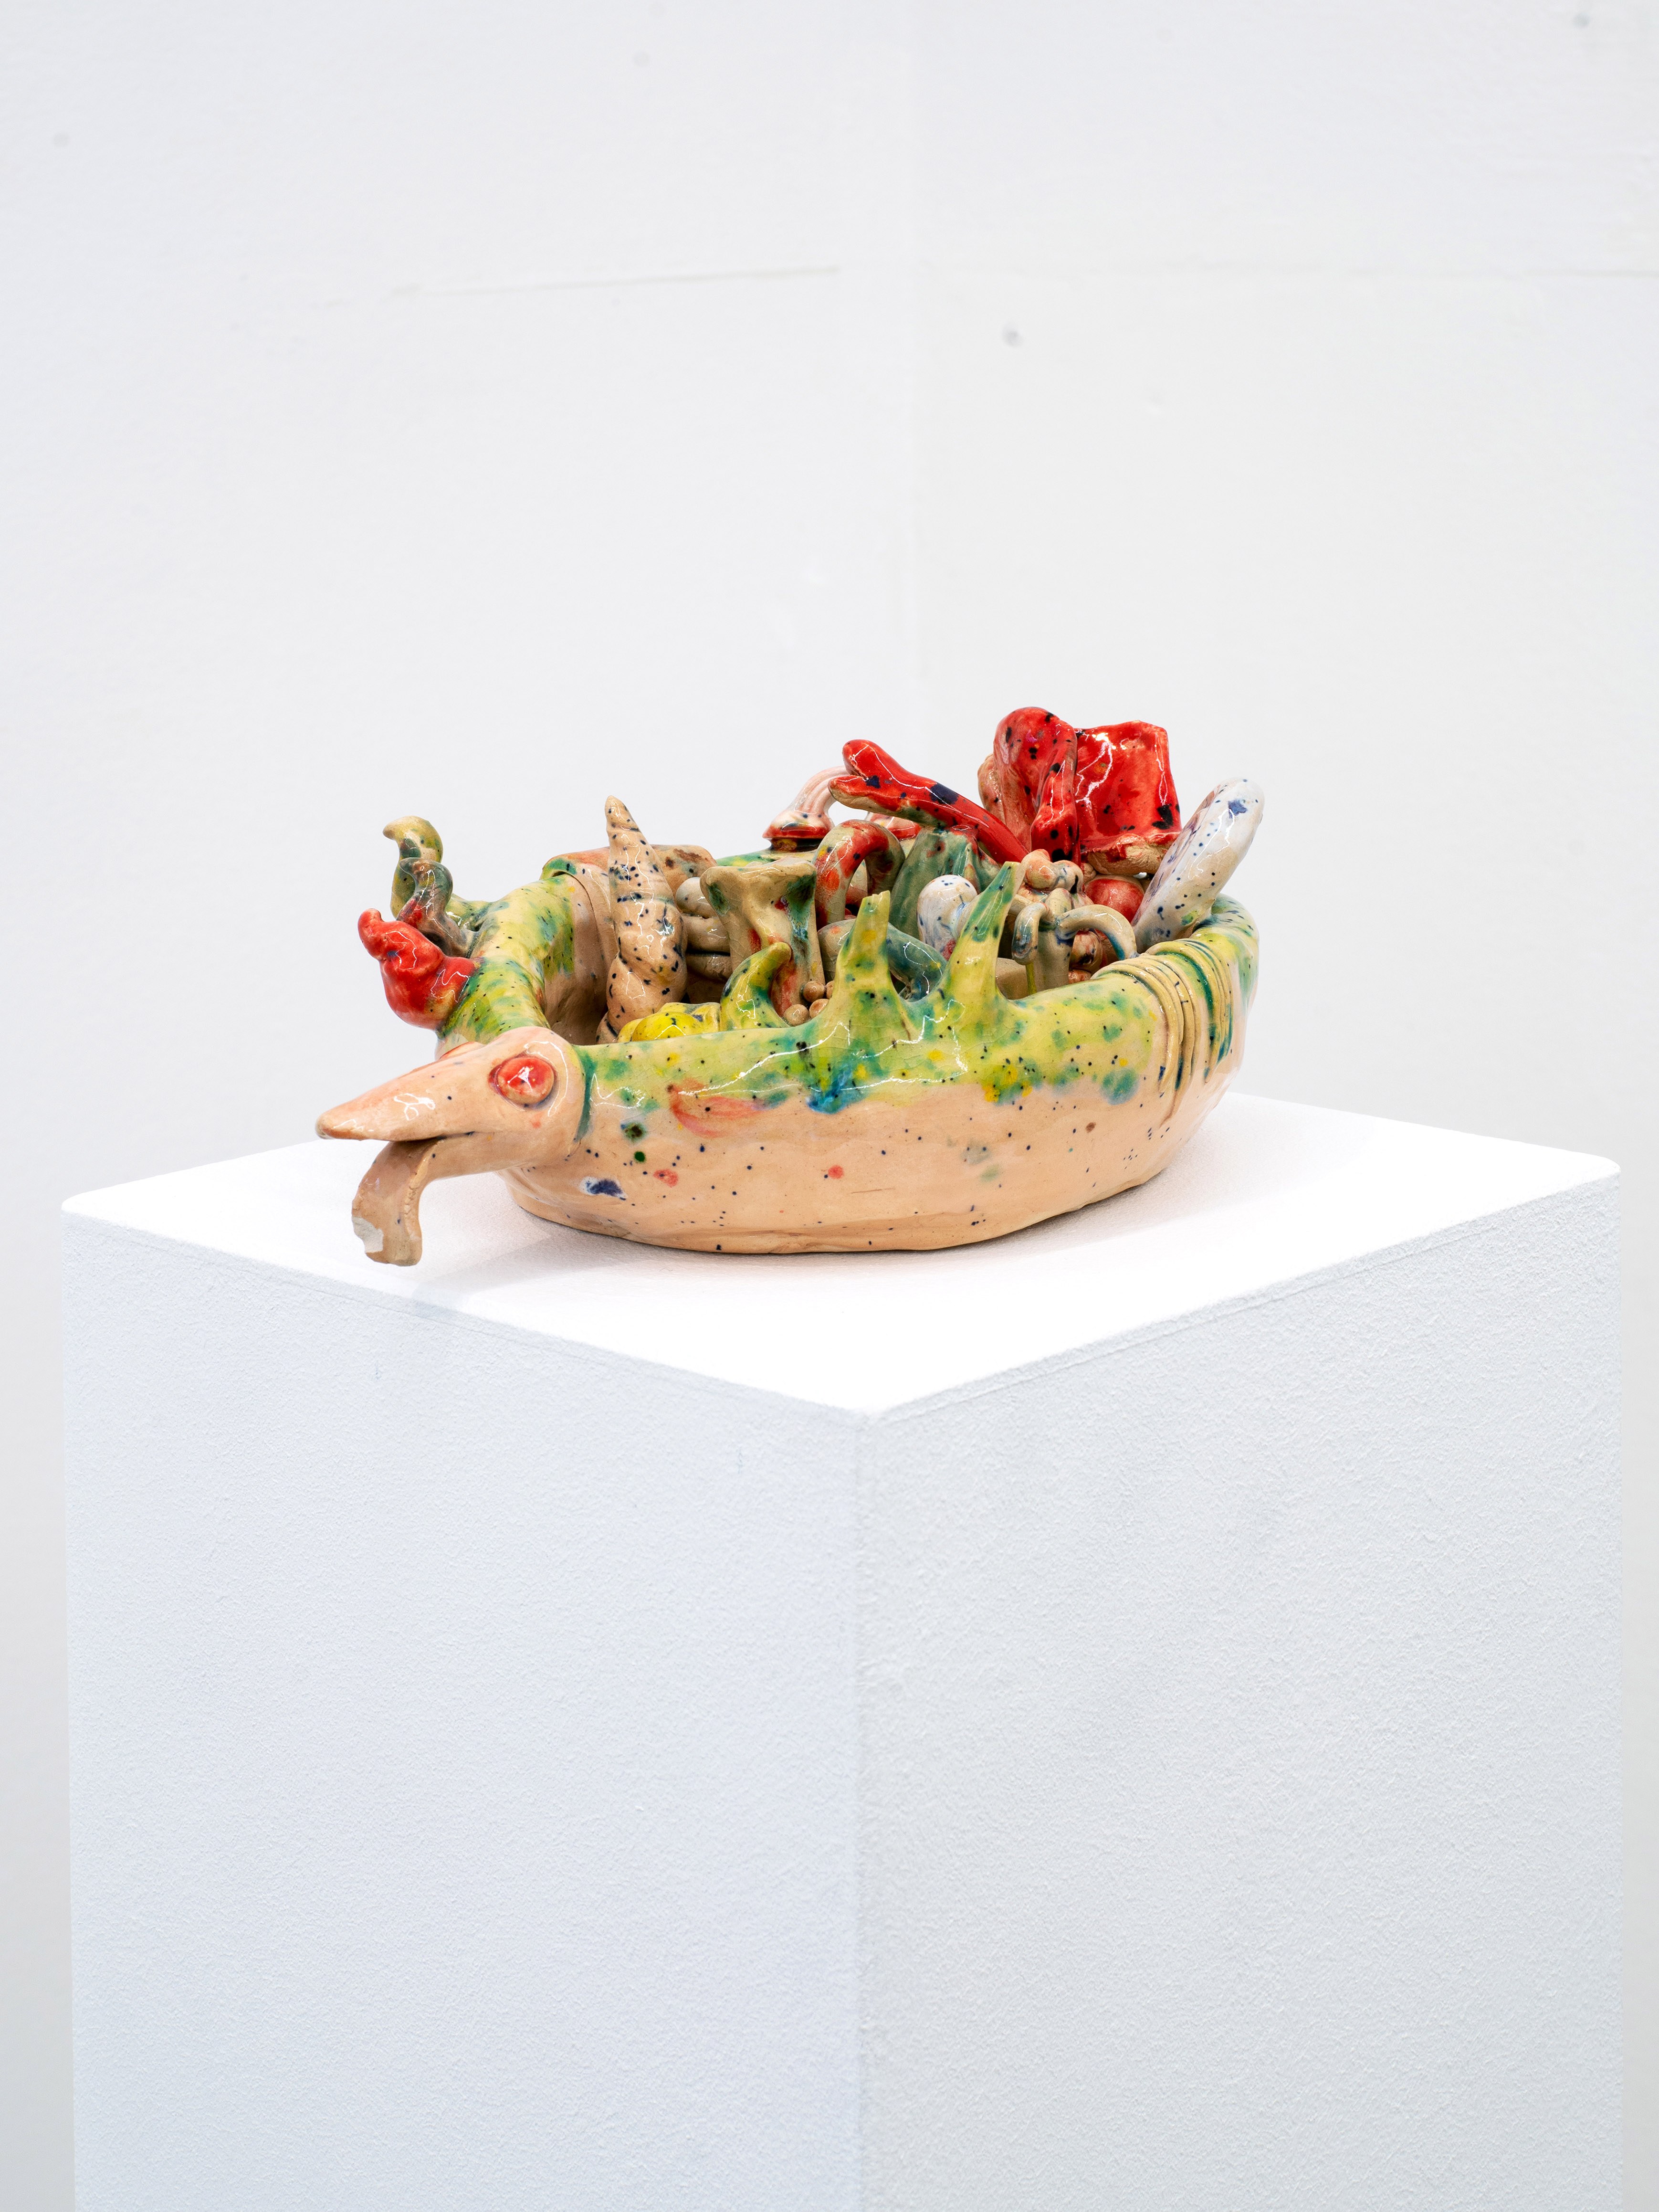 ERNIE WANG - Untitled (Boat), 2020, Glazed ceramics, 8 x 22 x 14 cm, 3 1/8 x 8 5/8 x 5 1/2 in